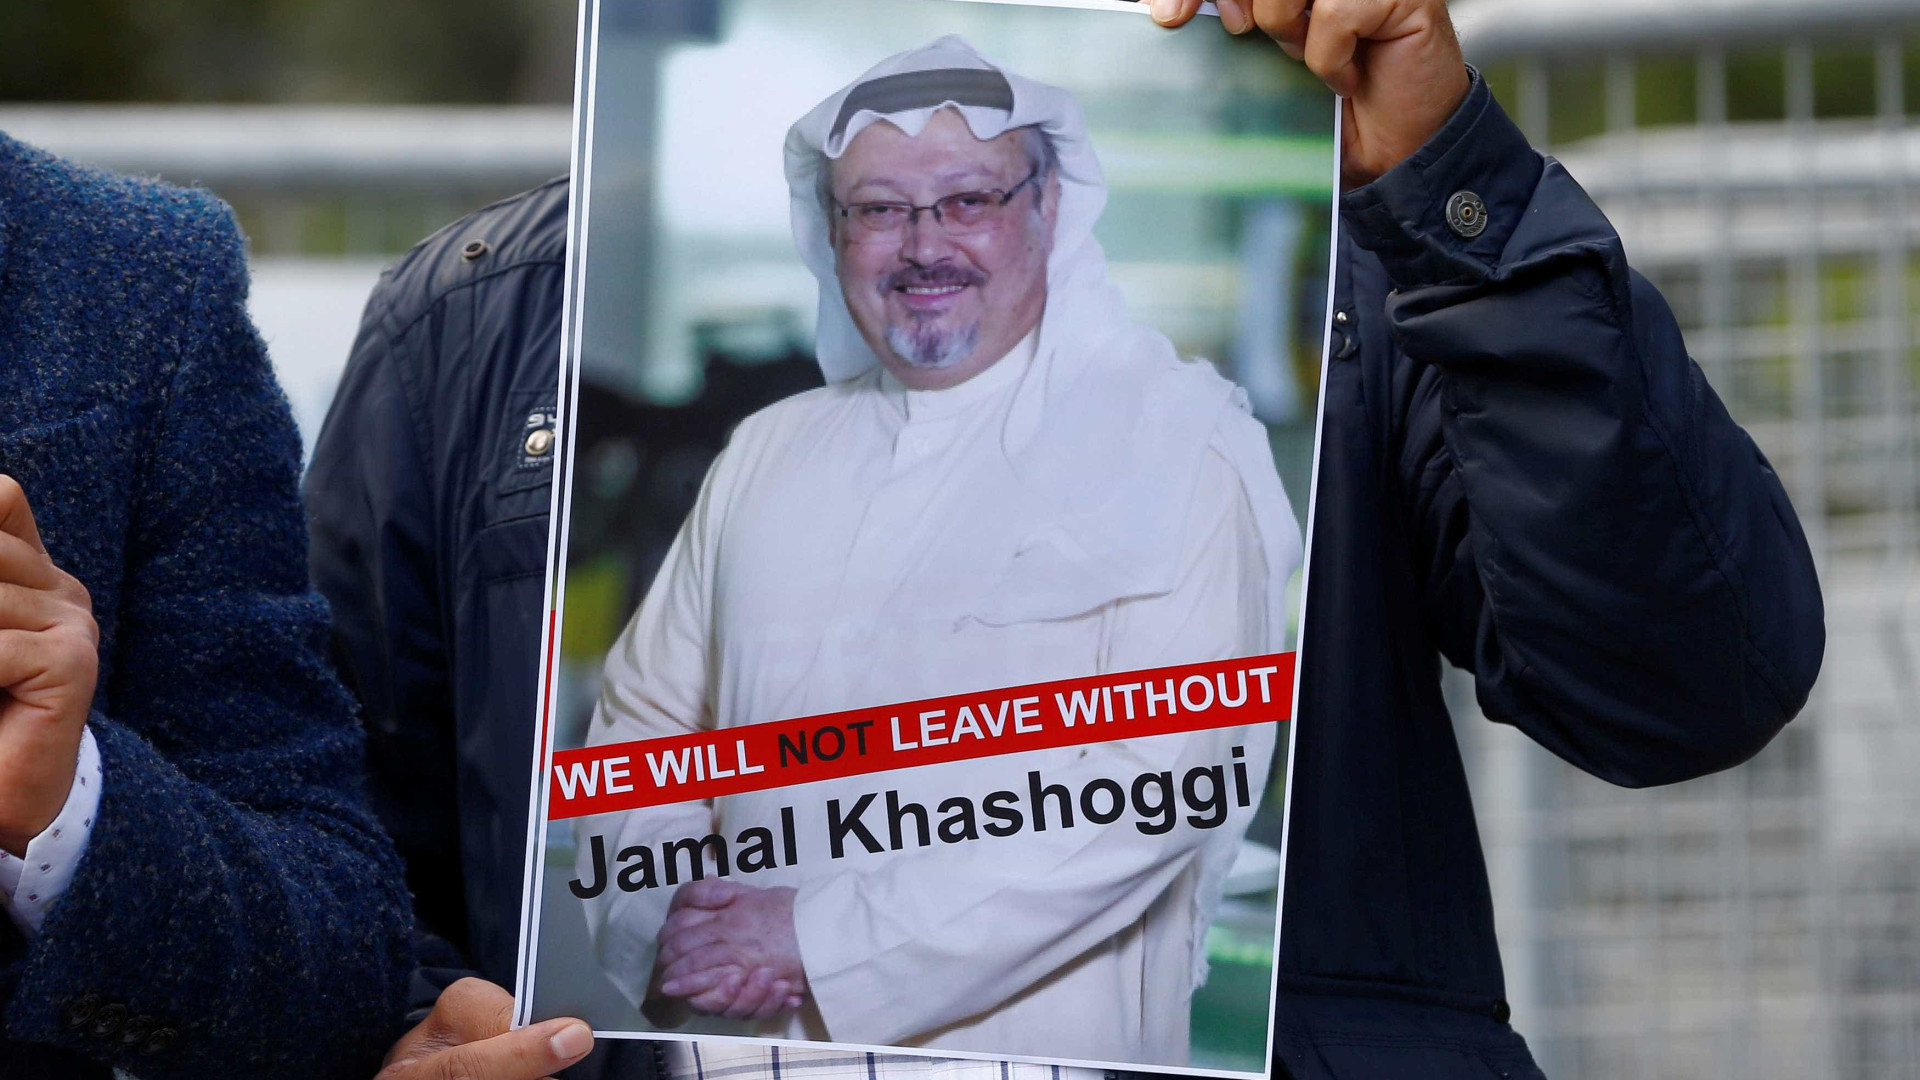 Jornalista saudita teria sido esquartejado vivo, diz jornal